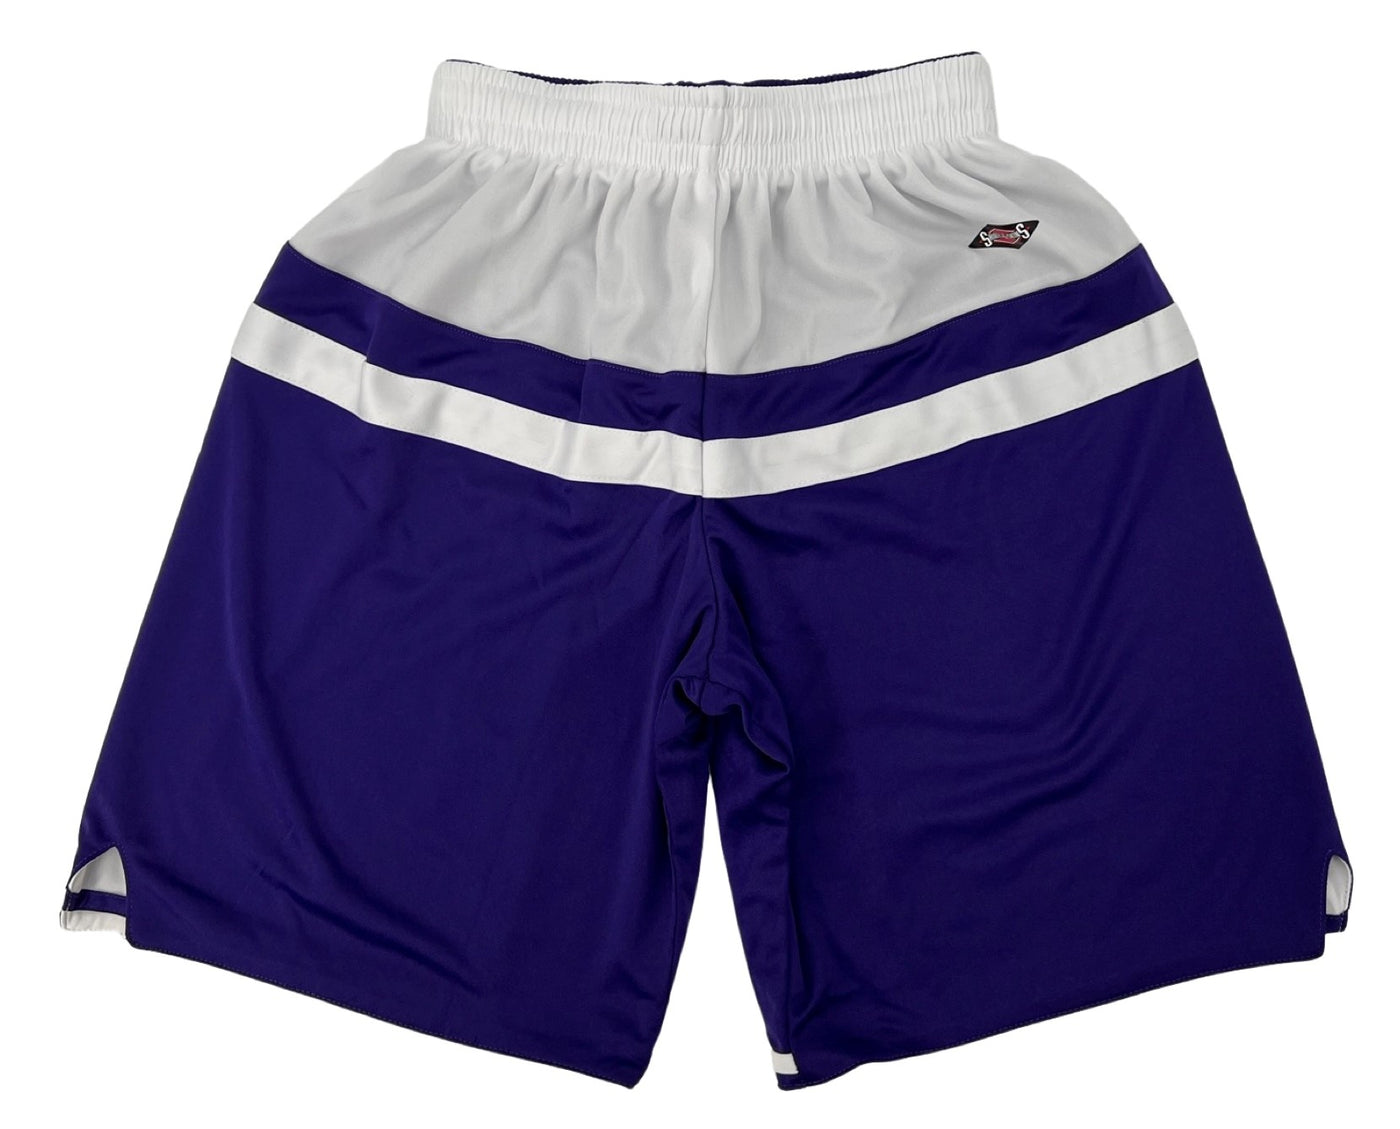 Shirts & Skins Purple/White All-Star Reversible Basketball Short